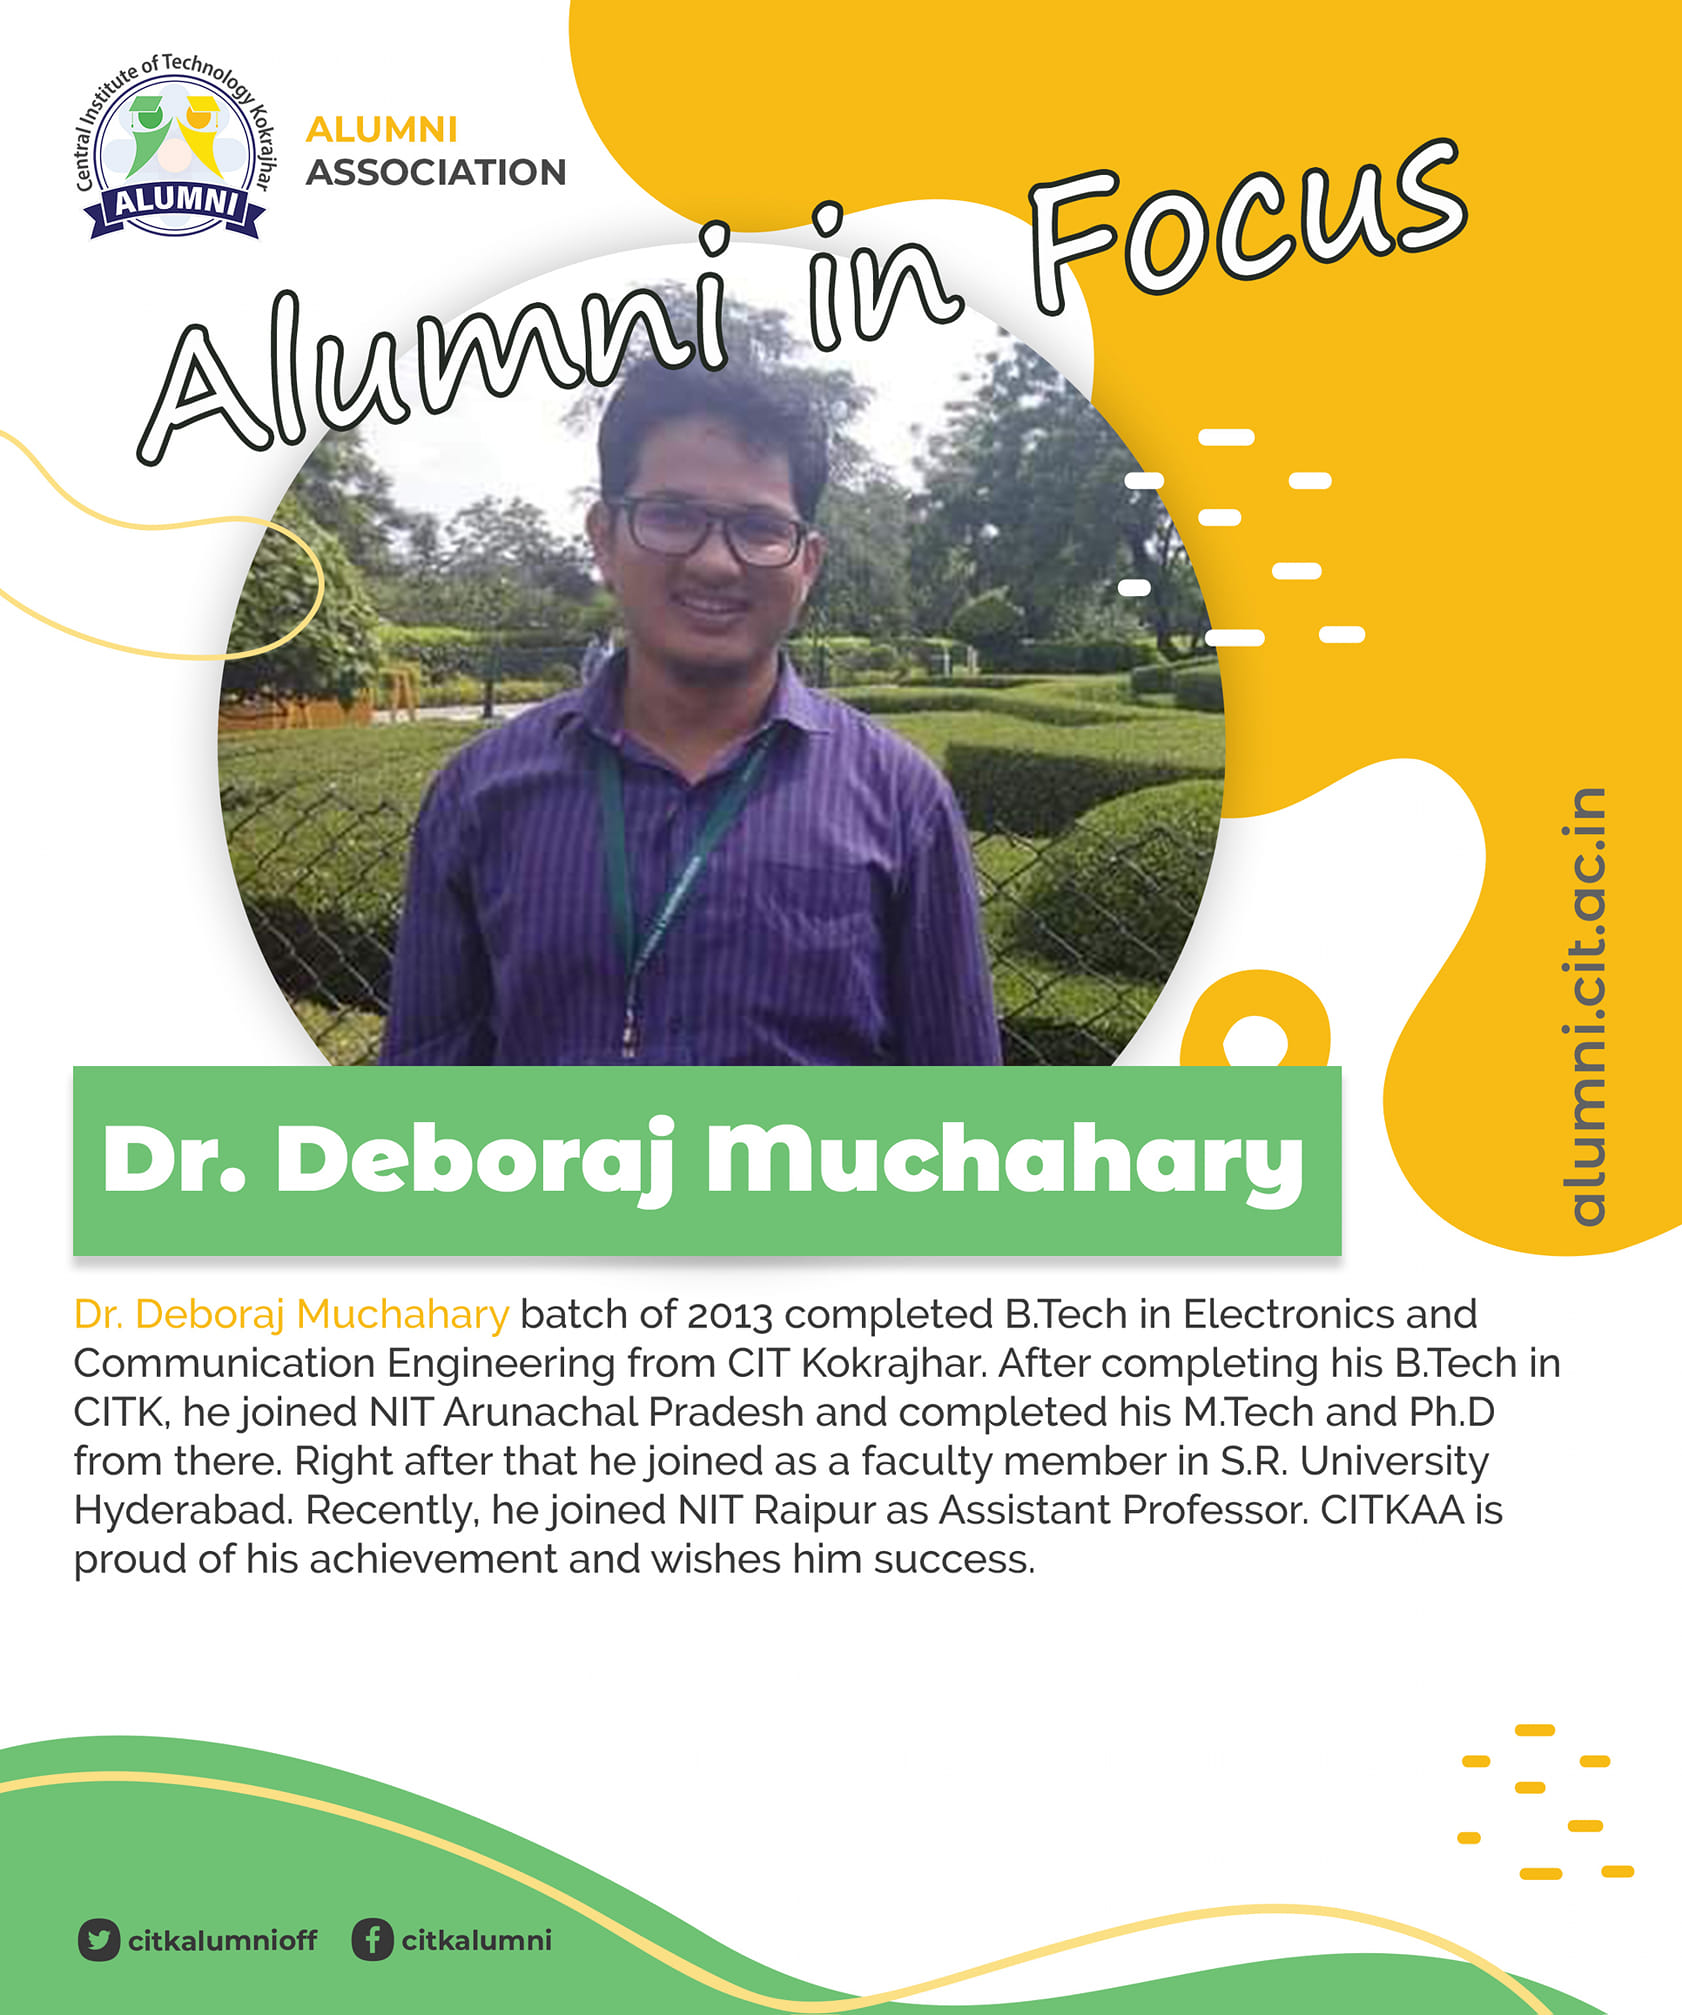 Dr. Deboraj Muchahary